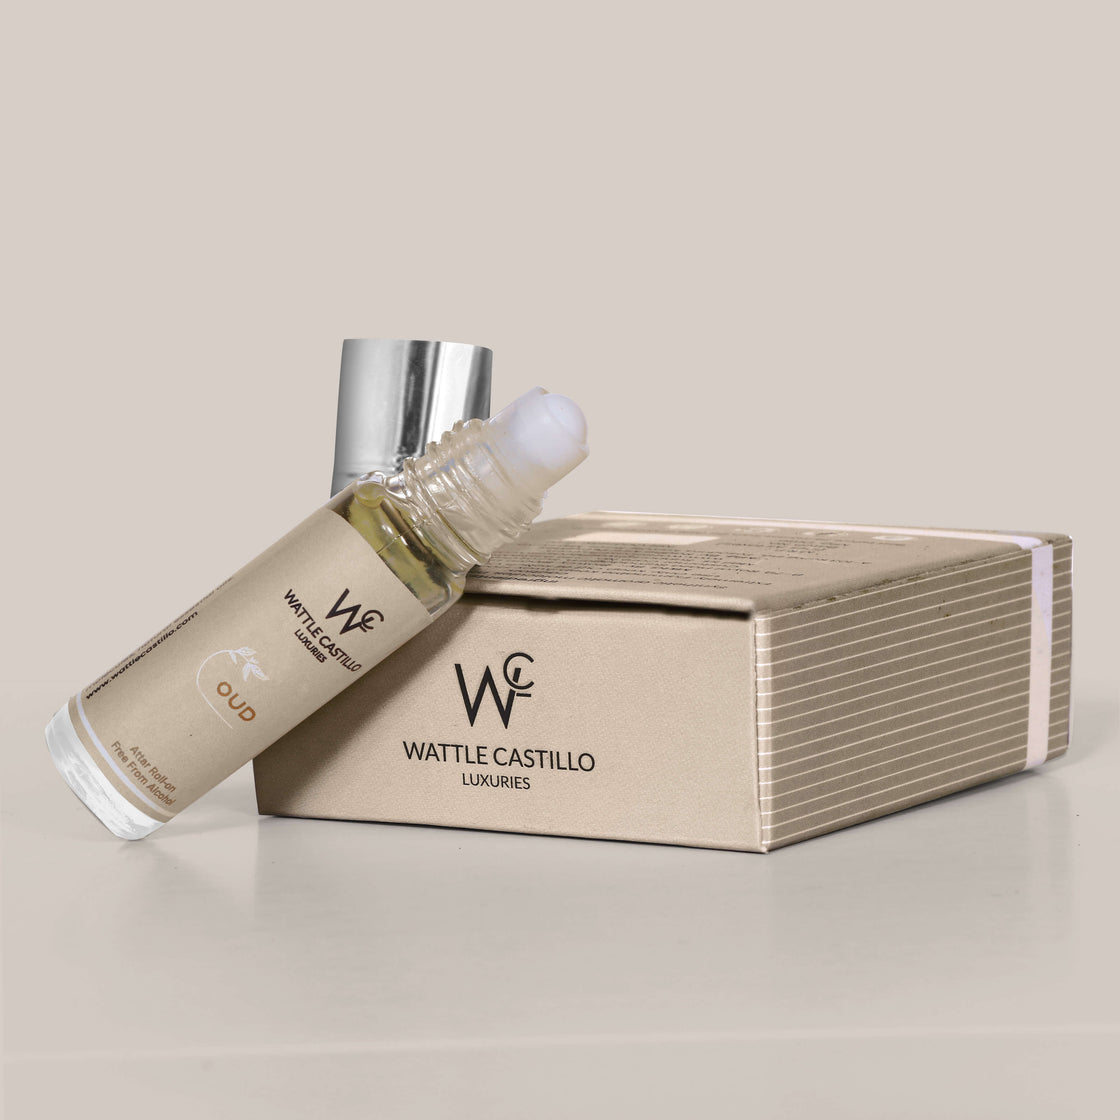 Wattle Castillo Swage And Oud Premium Luxury 100% Non Alcoholic Long Lasting Roll On Attar Combo Perfume For Unisex - Wattle Castillo